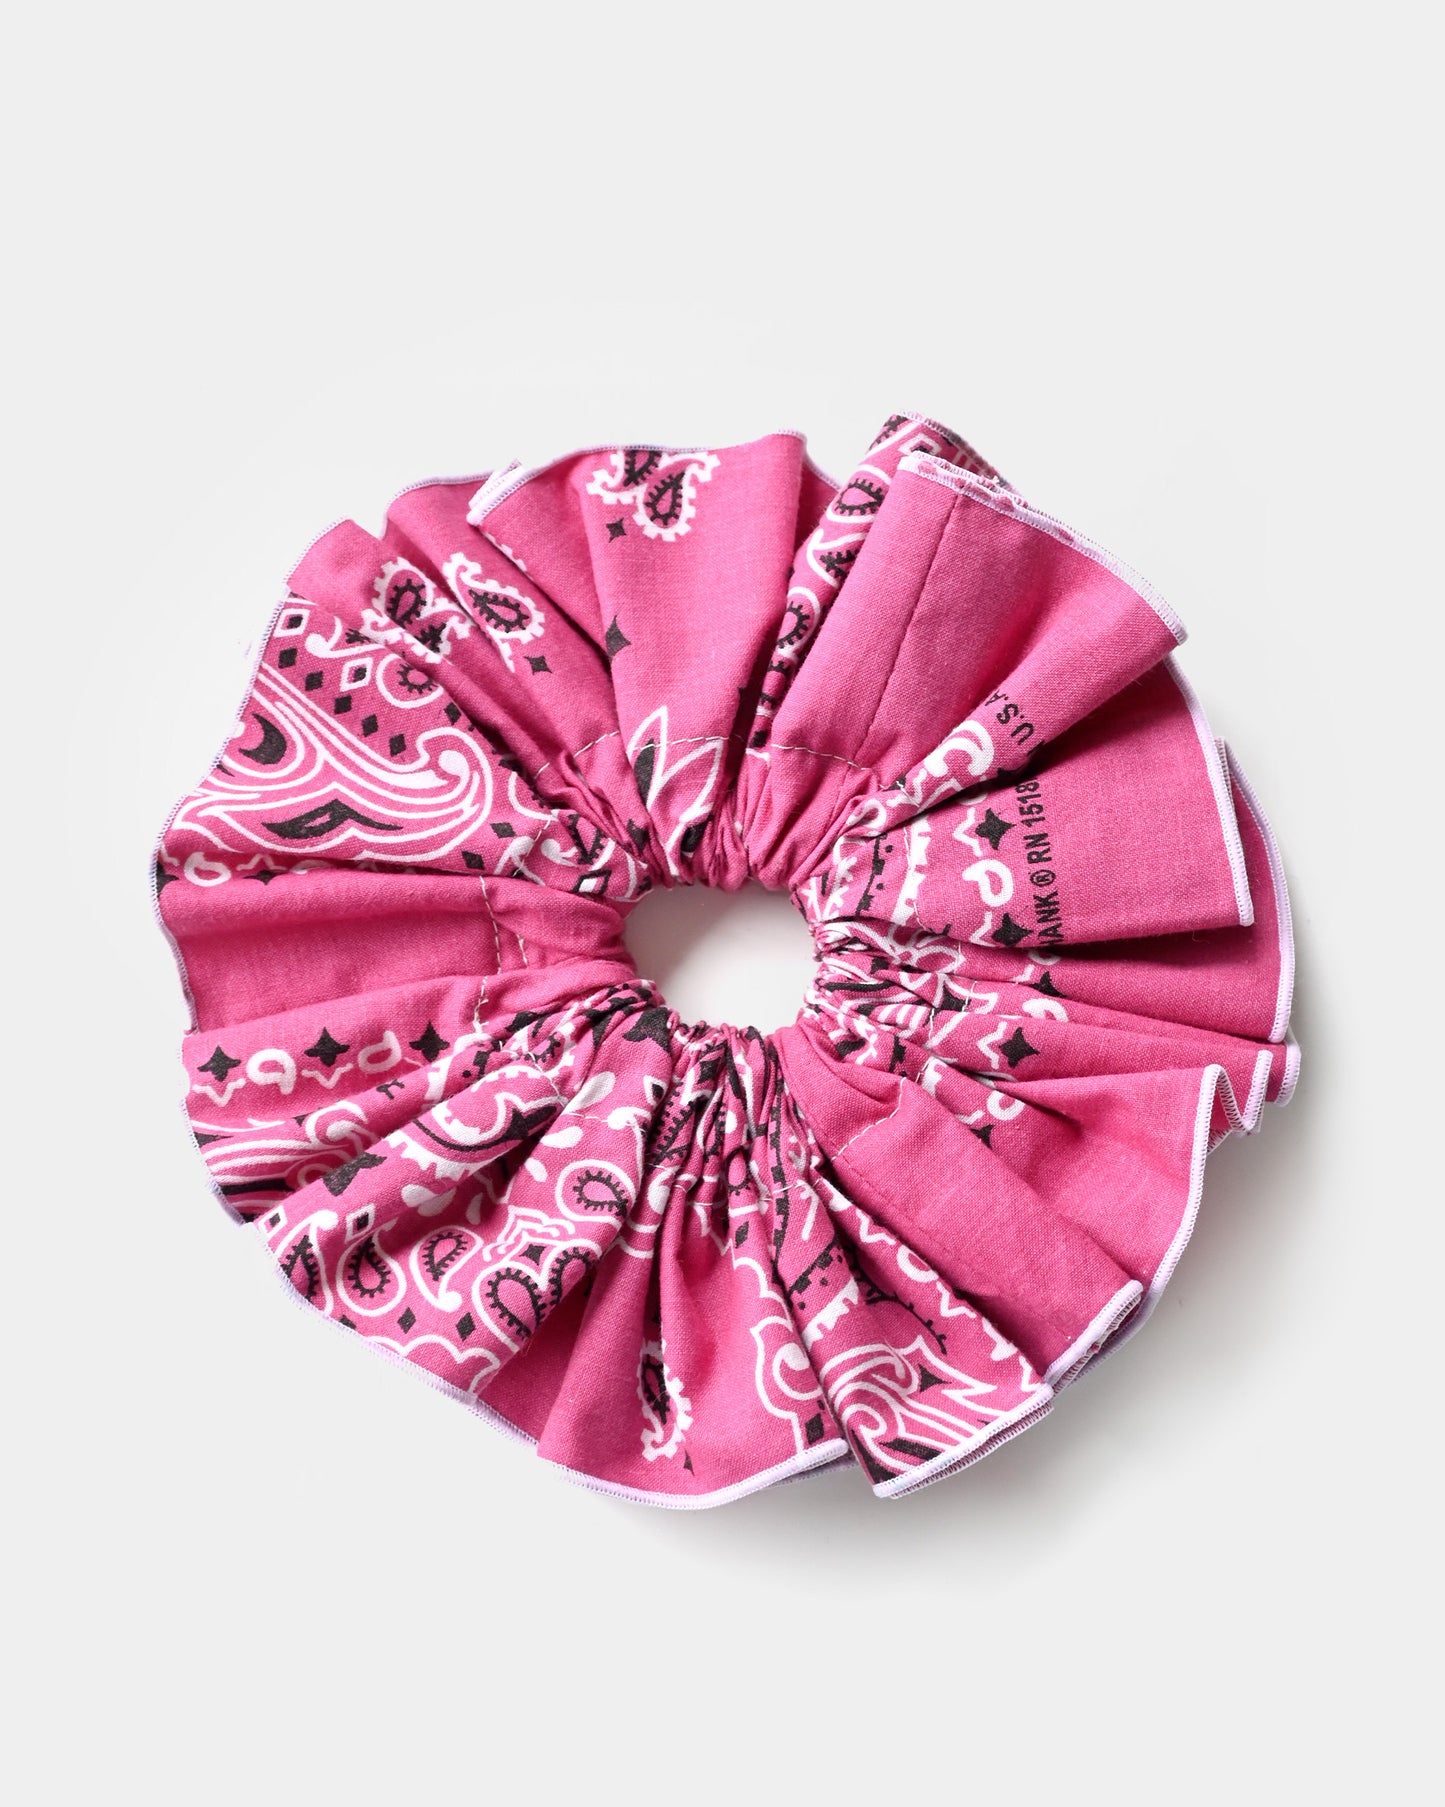 [IKUHO x 404] Hand Made Chouchou - Pink